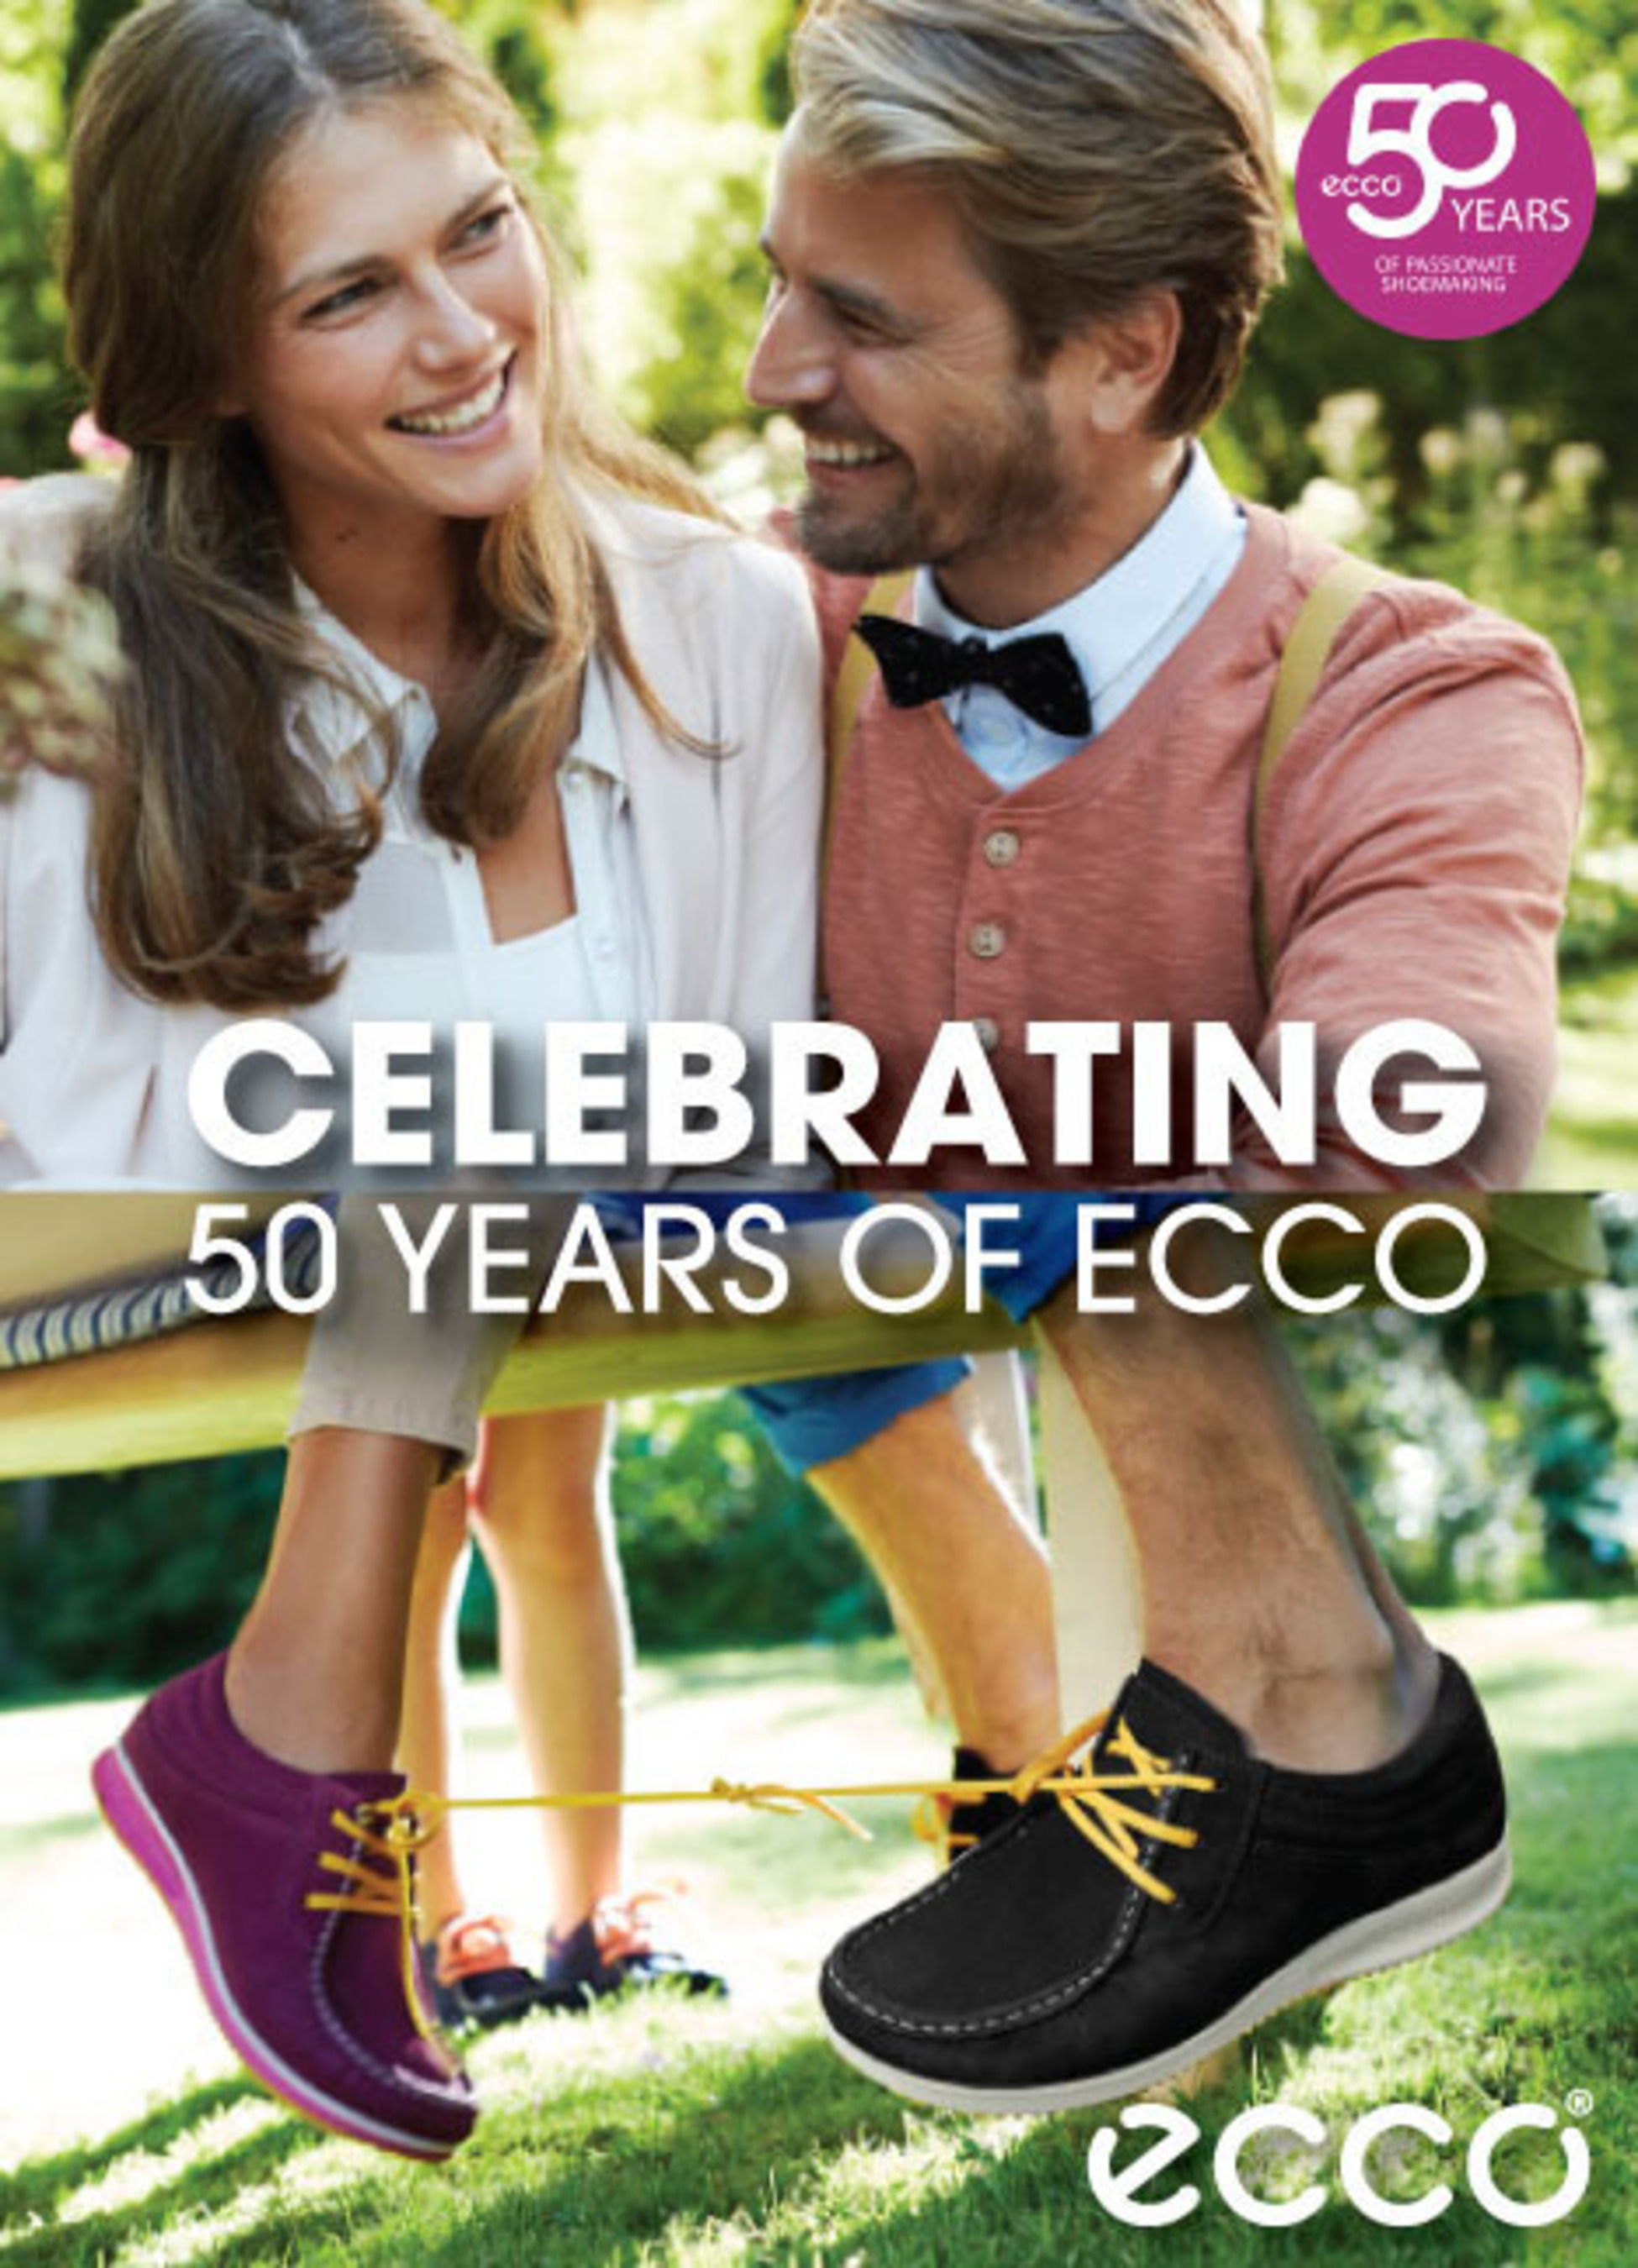 Tomat dannelse kursiv World's Second Largest Shoe Manufacturer, ECCO, Celebrates 50 Years Of  Passionate Shoemaking